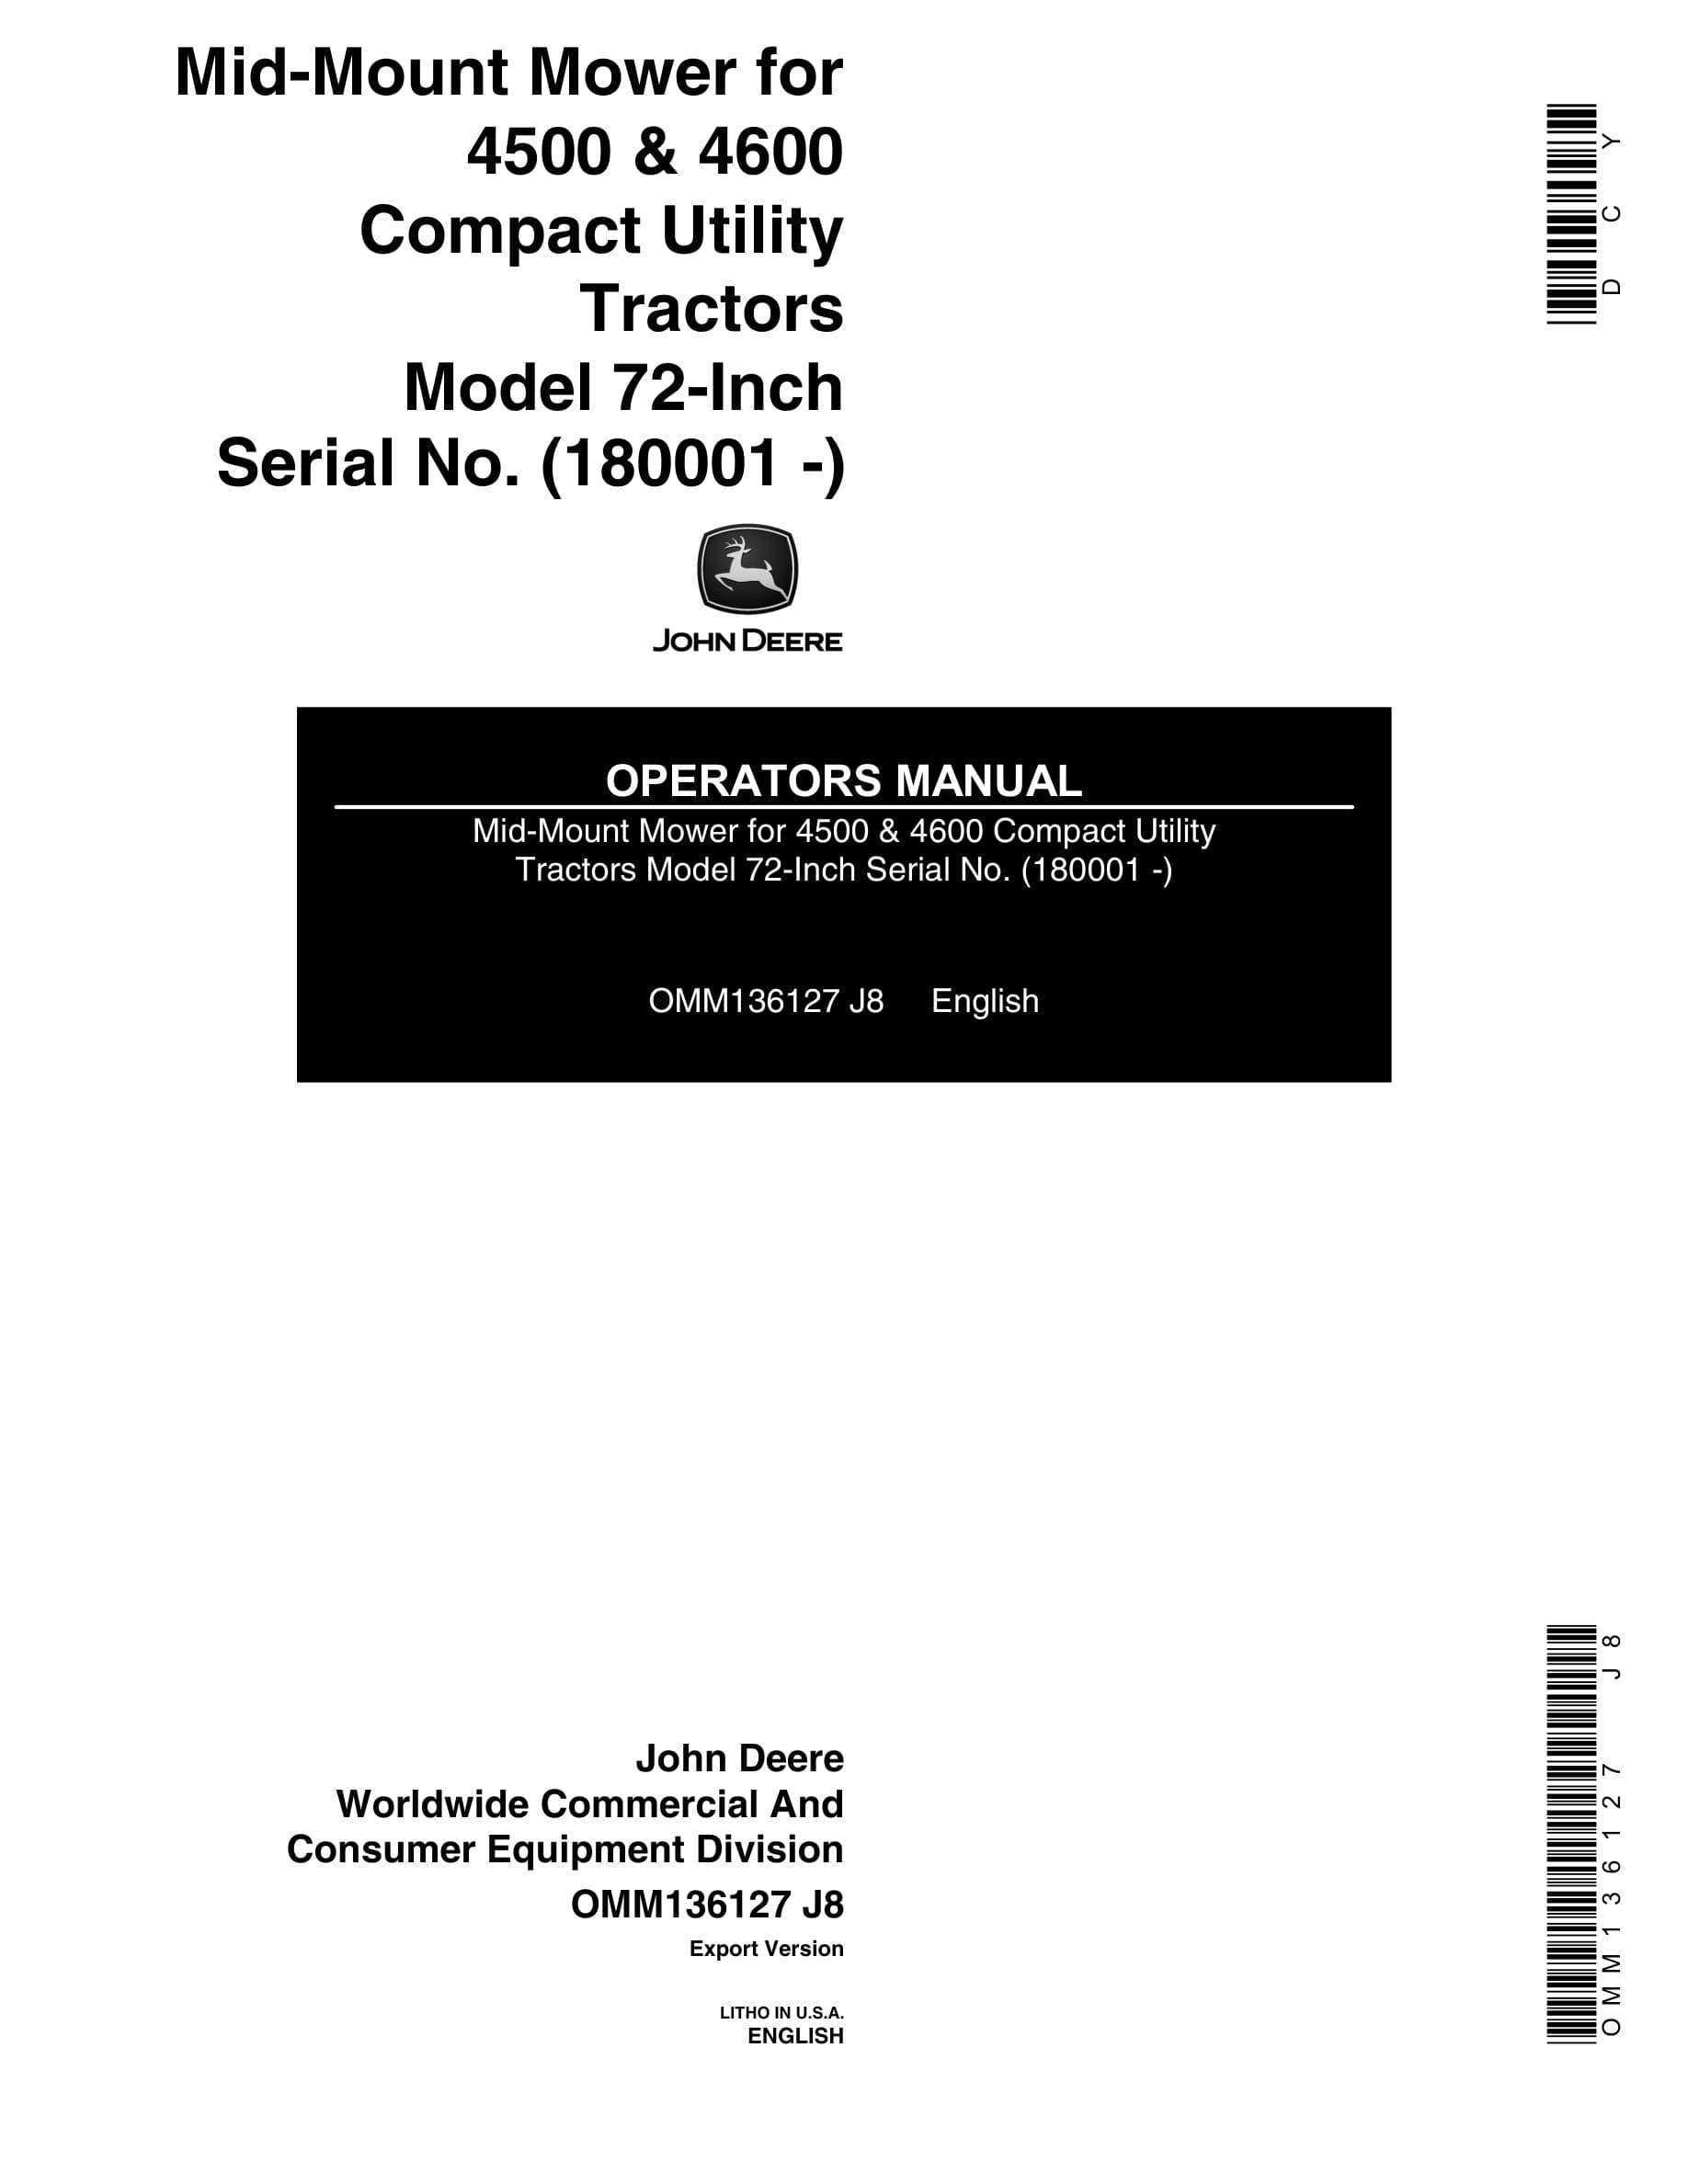 John Deere Mid-mount Mower For 4500 & 4600 Compact Utility Tractors Operator Manuals Model 72-inch OMM136127-1